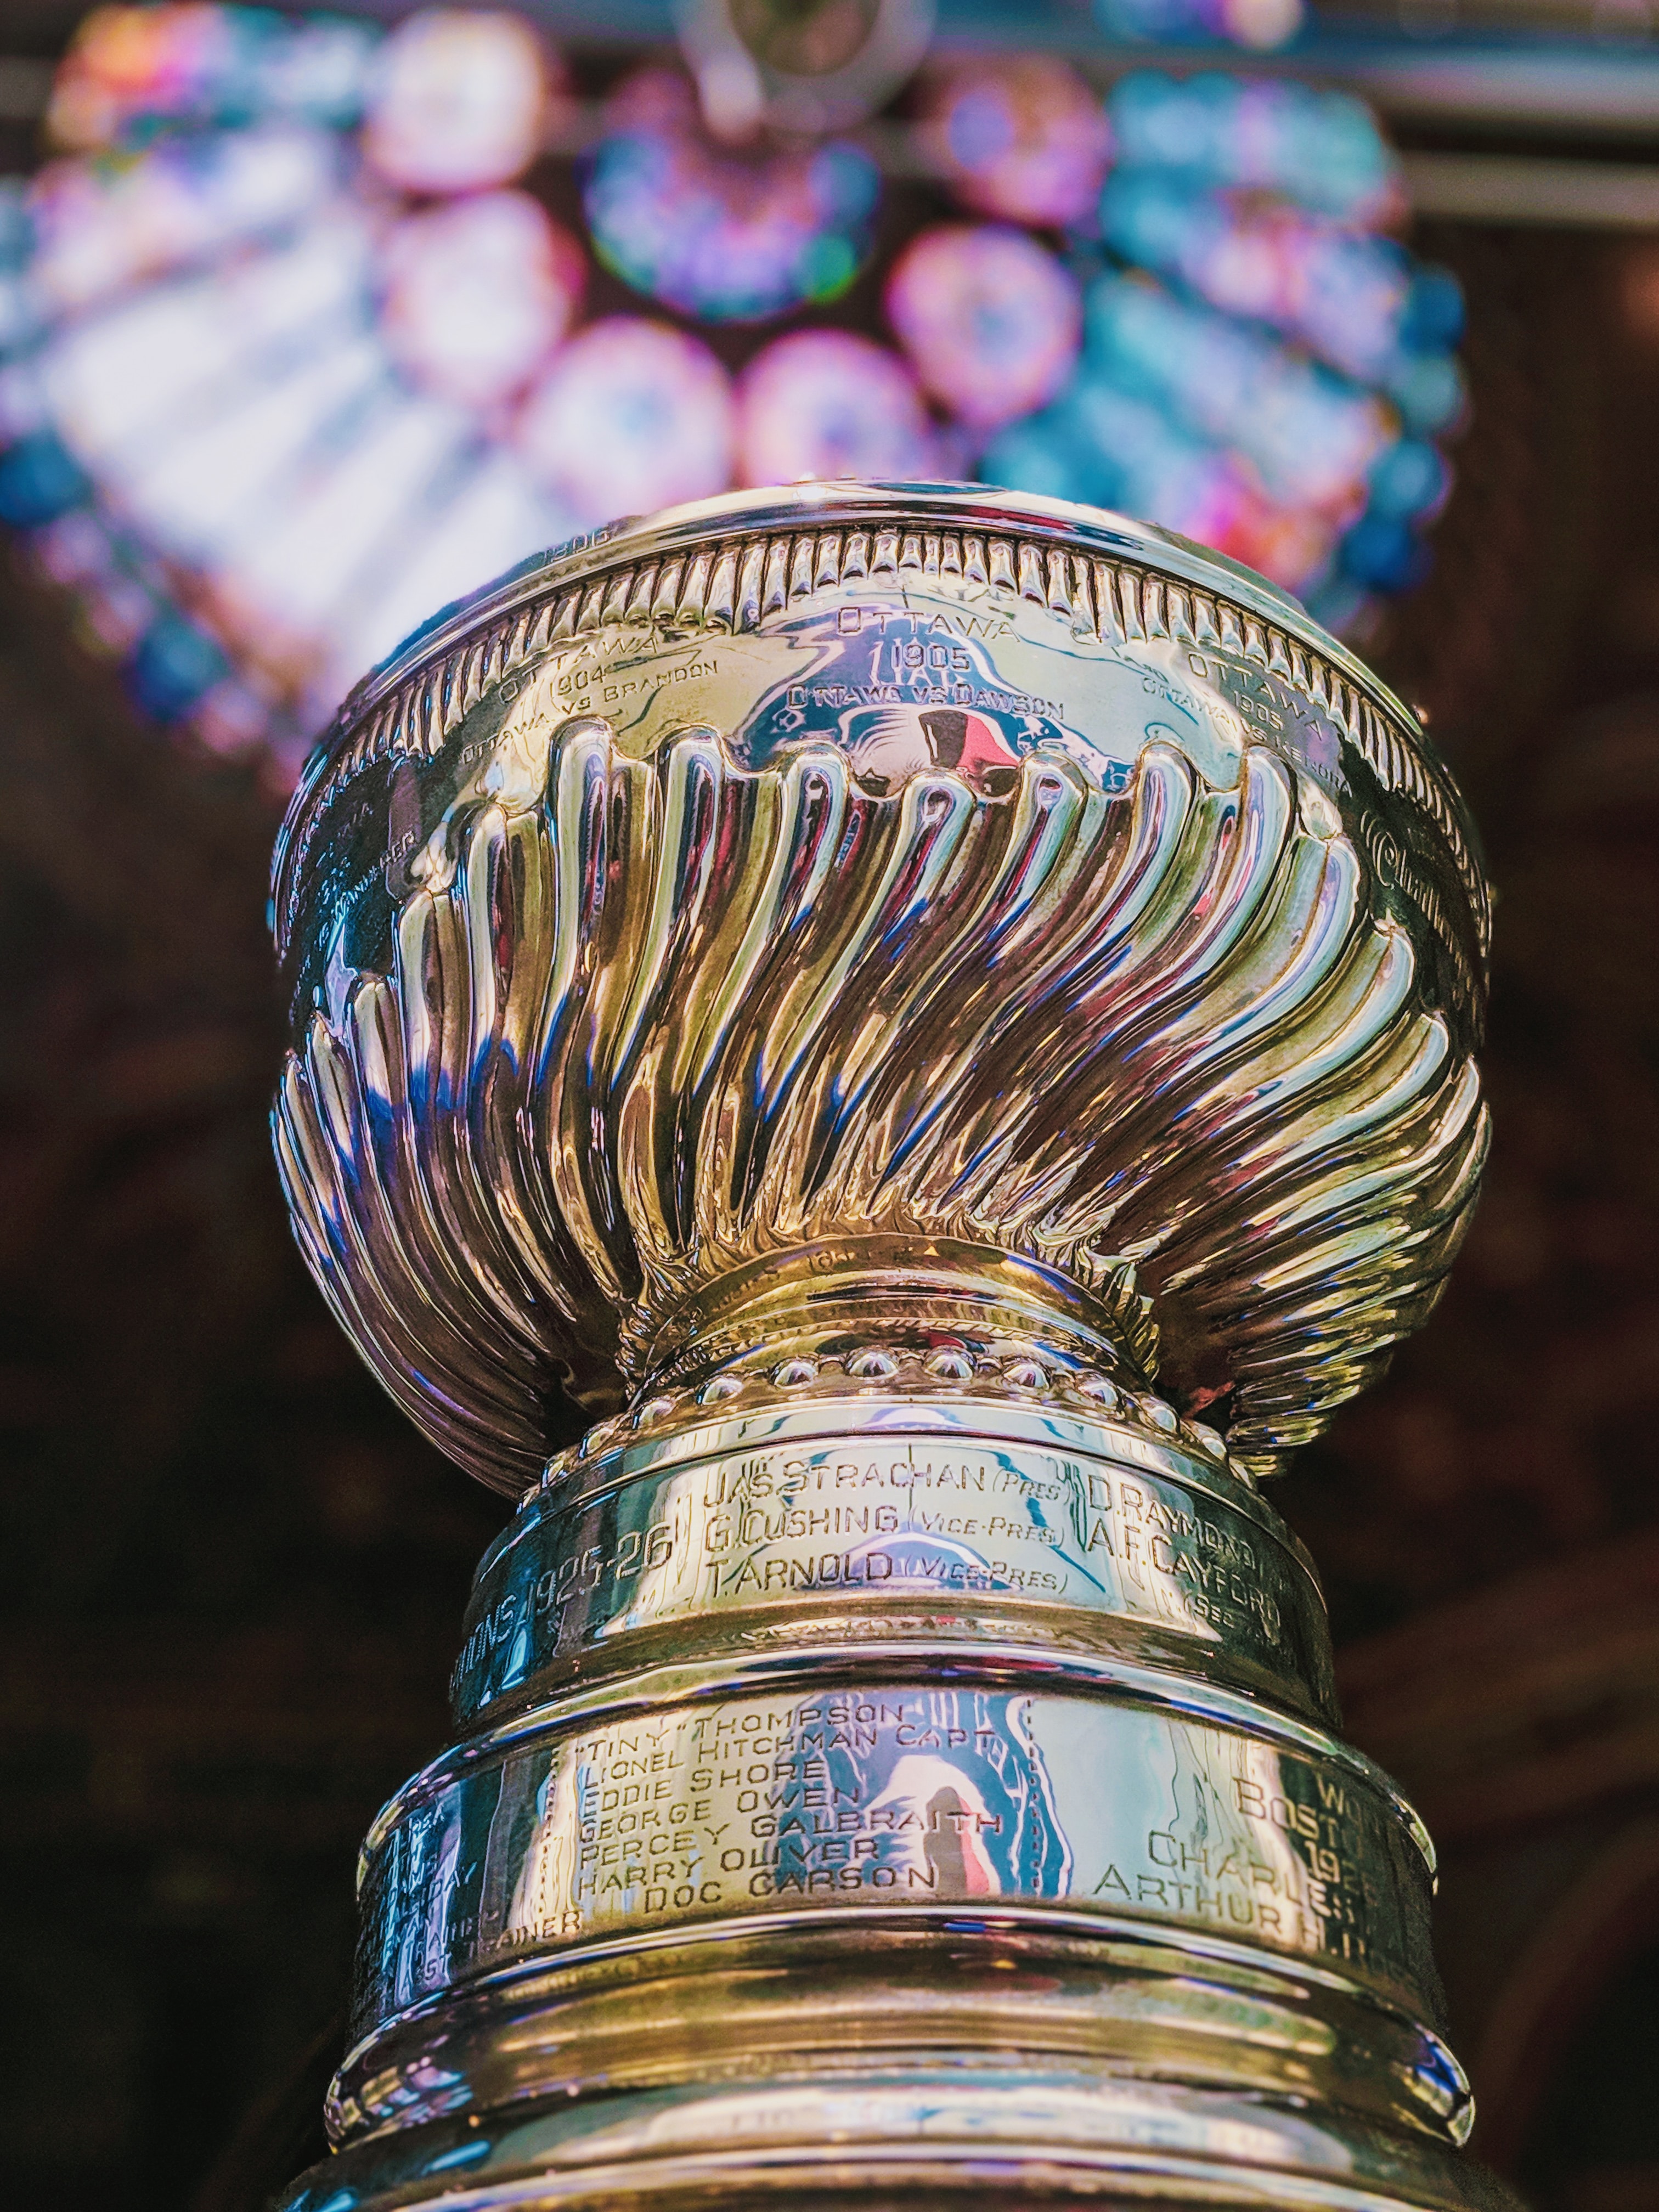 Stanley Cup | Photo by Josh Appel on Unsplash